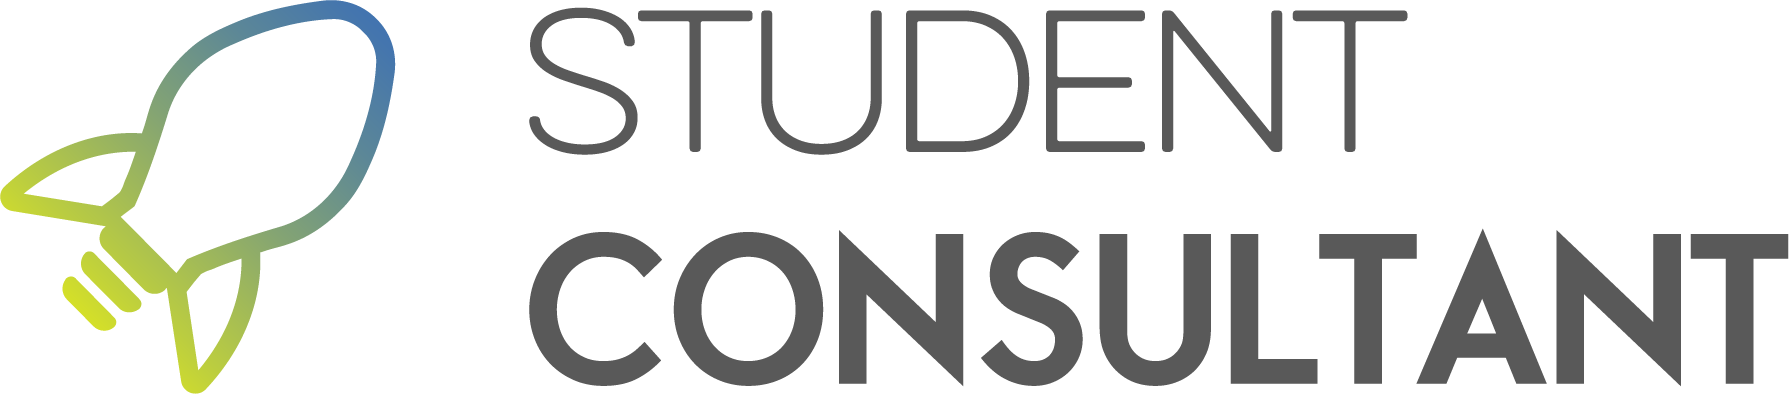 Logo Student Consultant grijs met transparante achtergrond